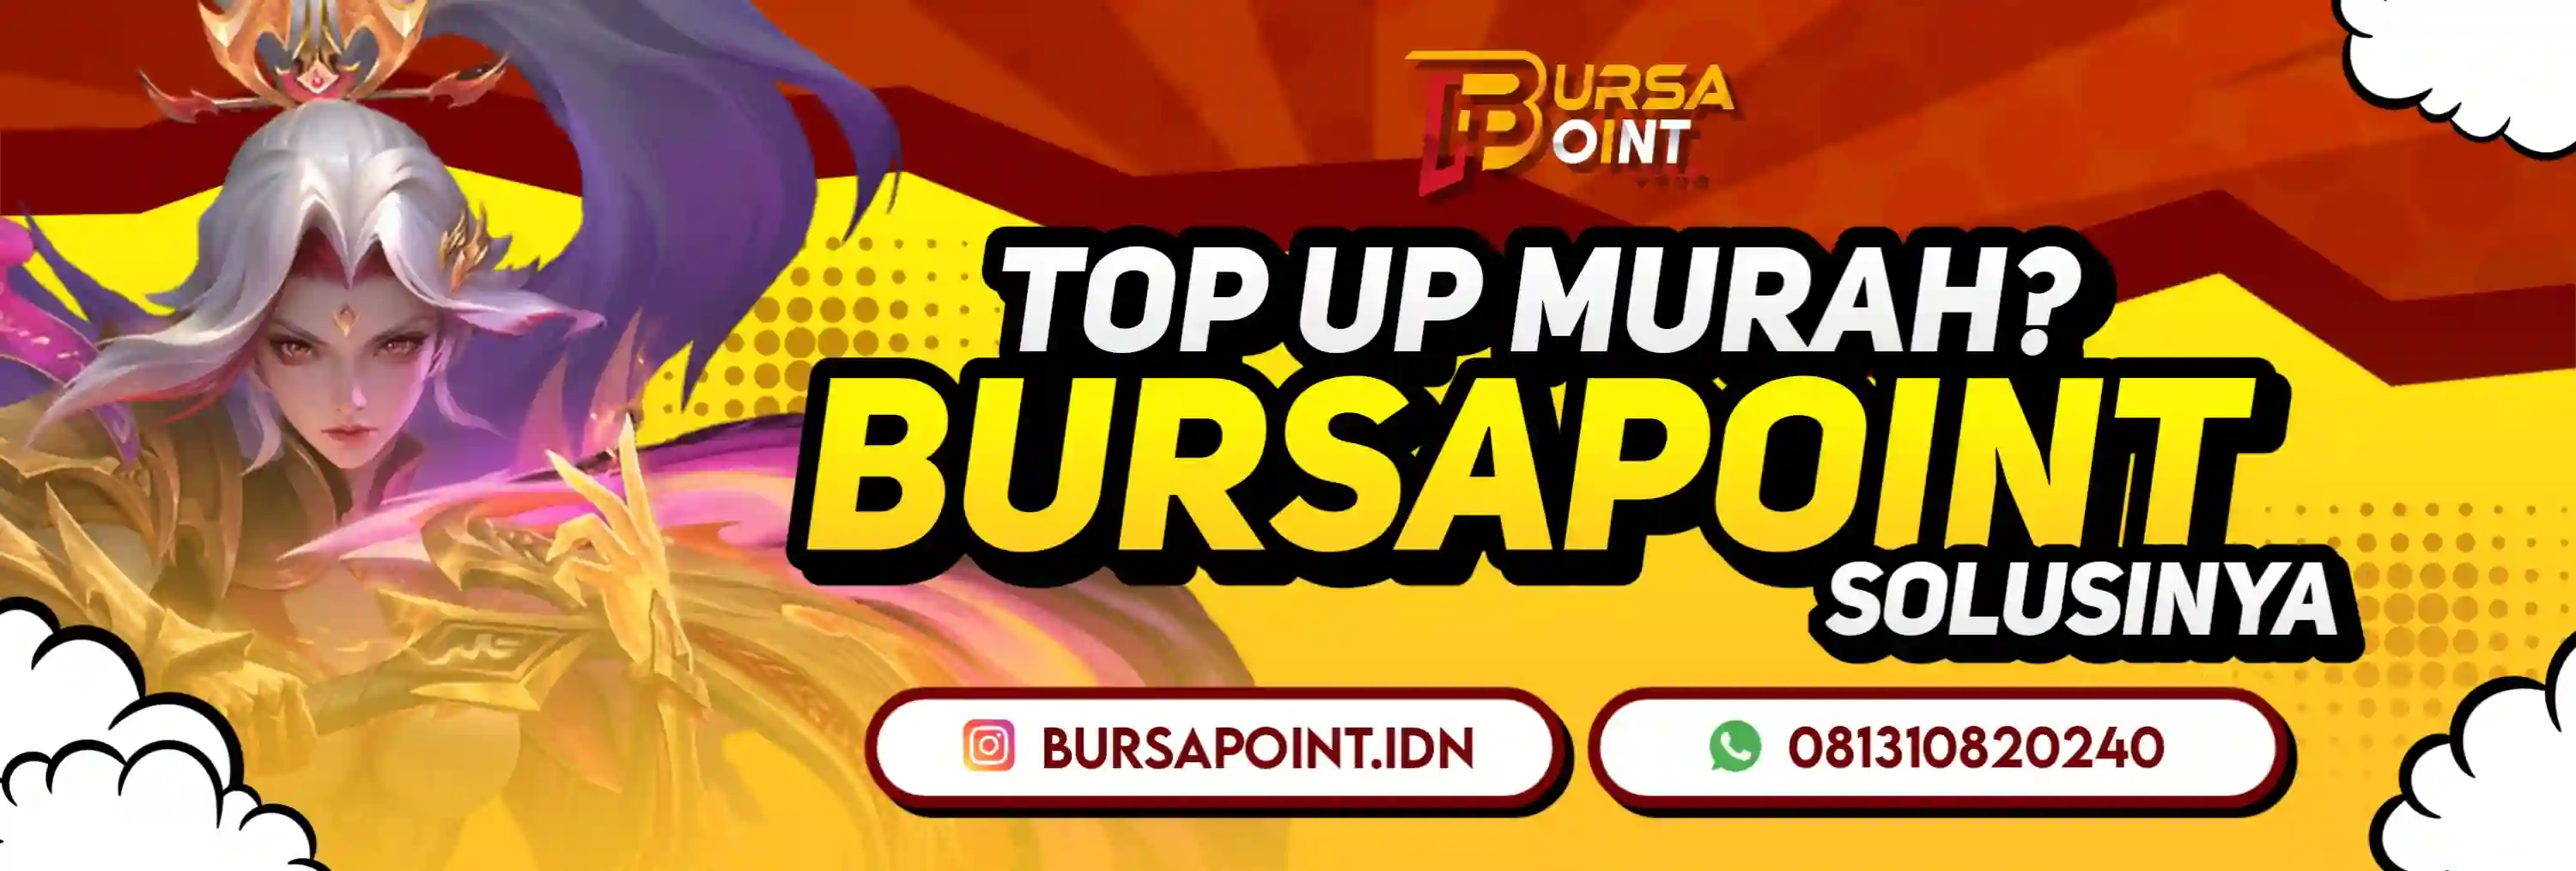 Bursa Point